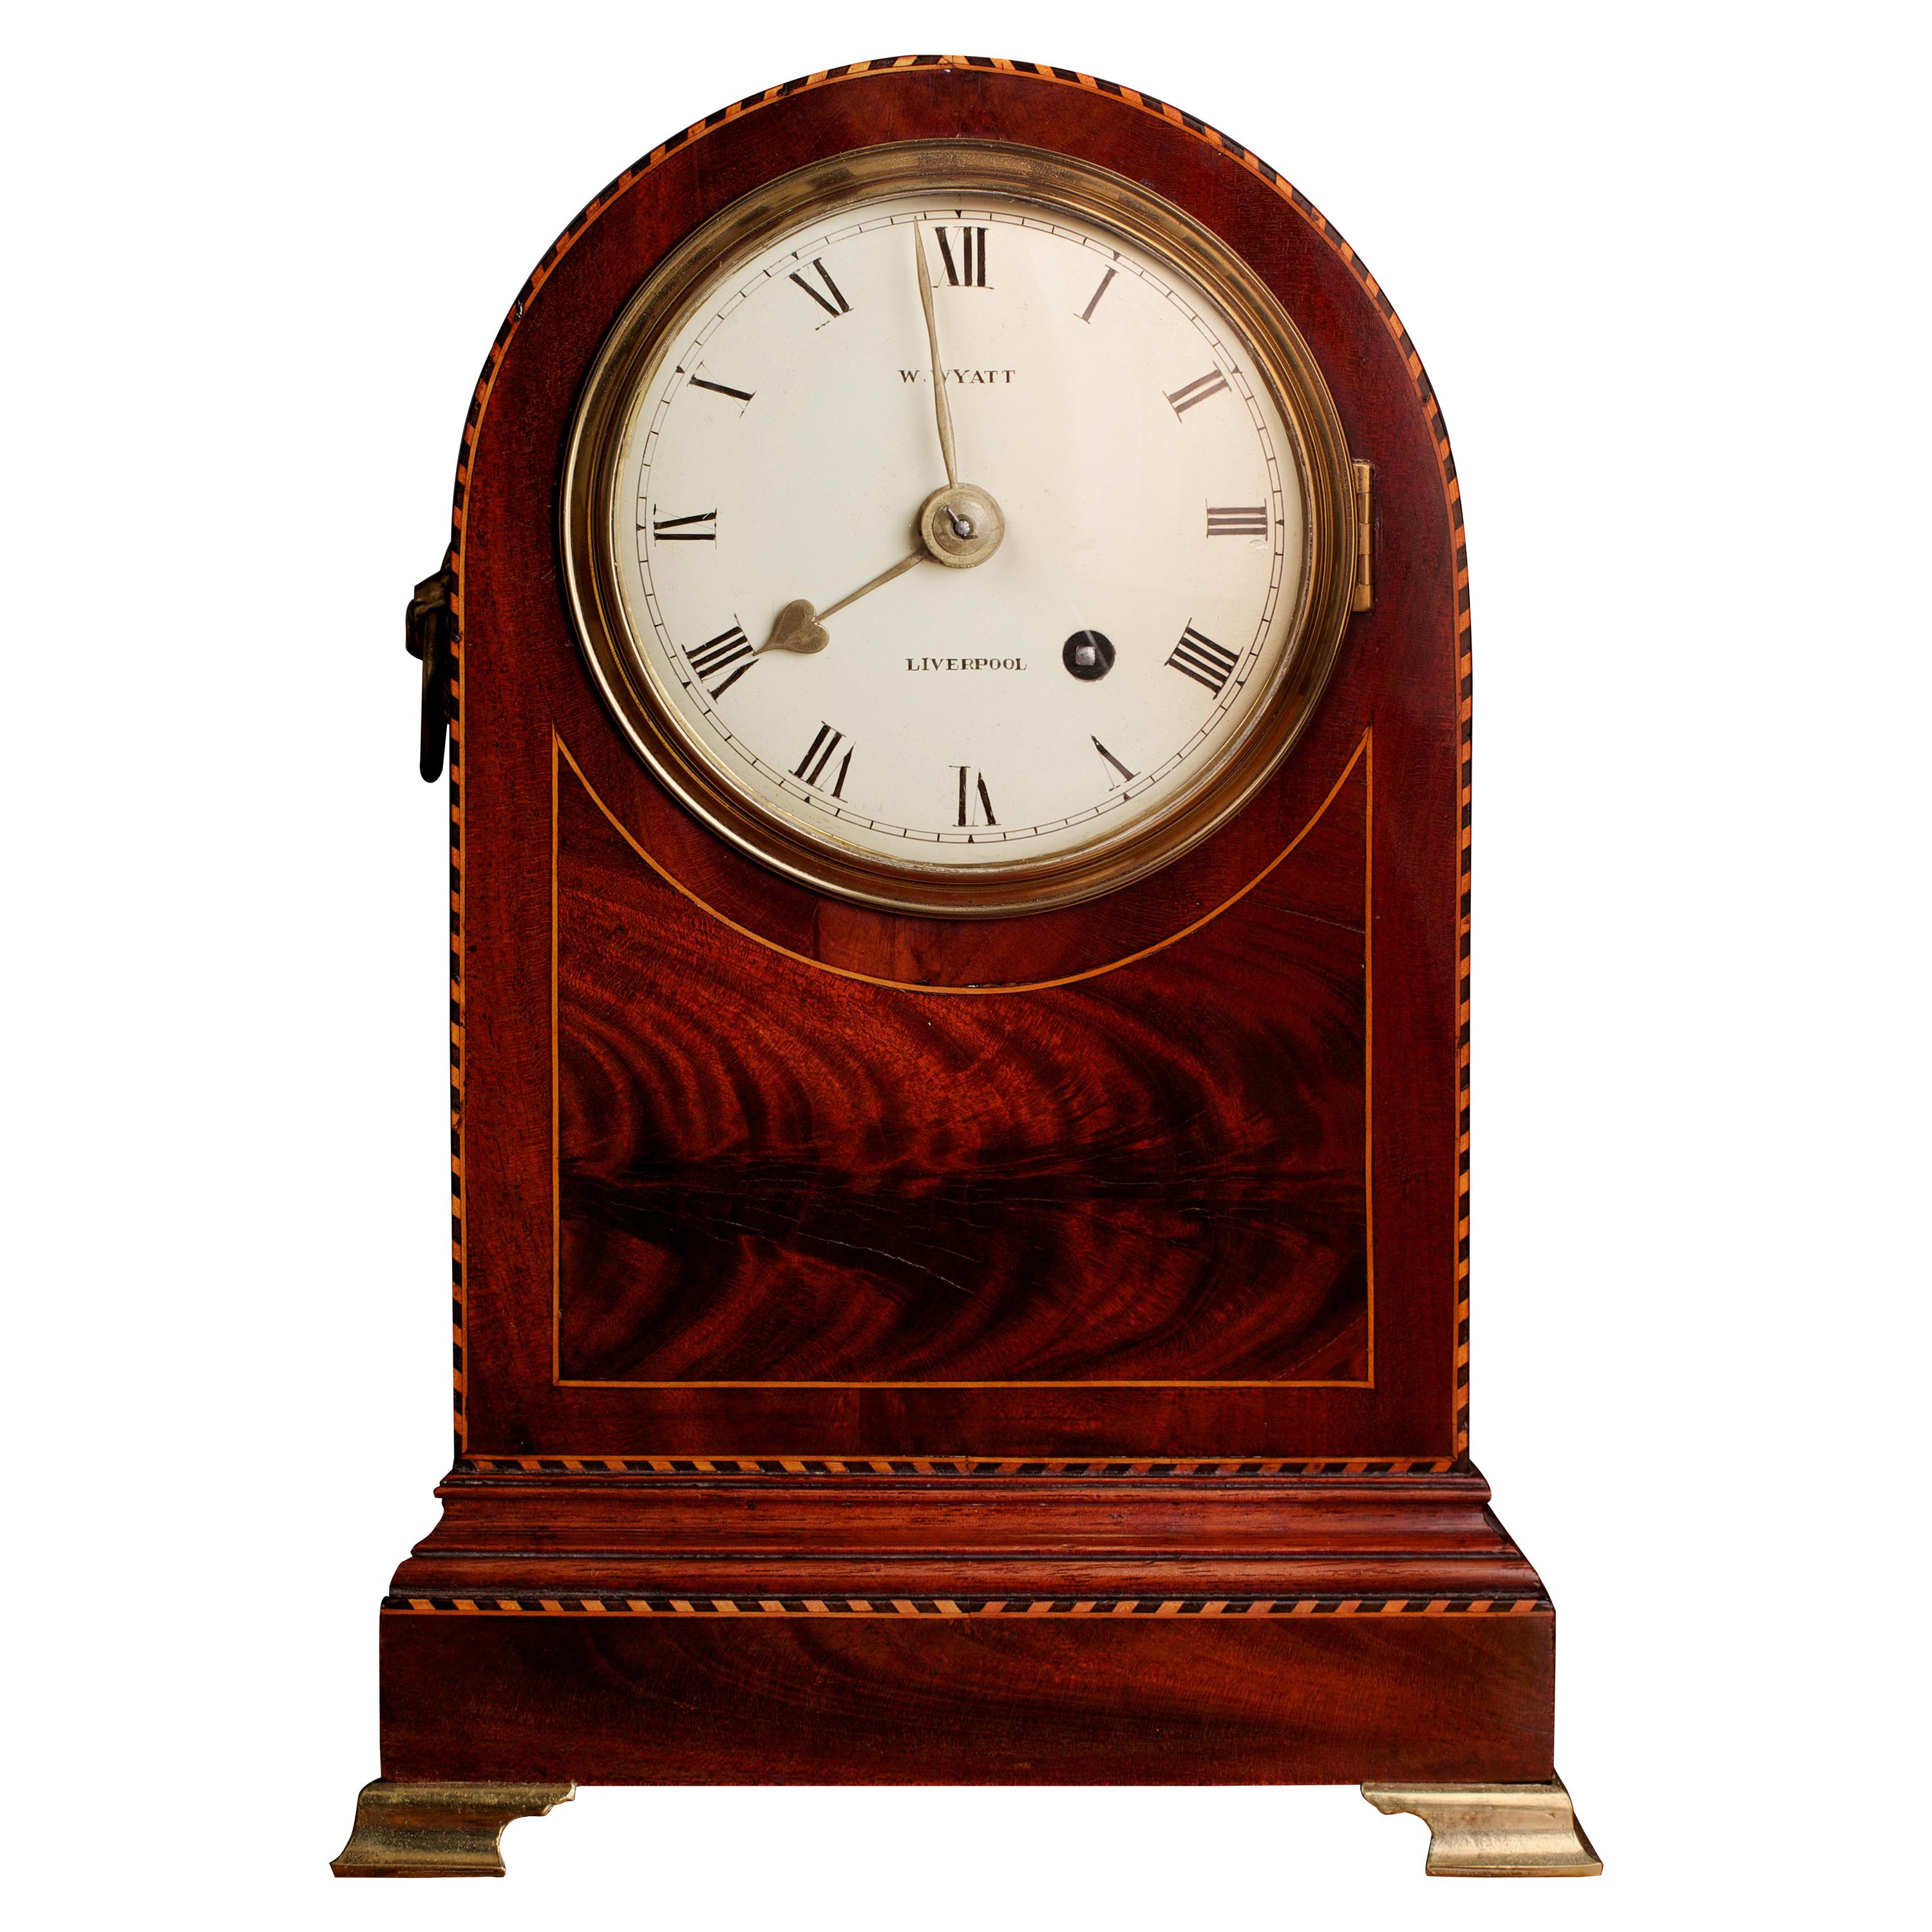 Regency Small Mahogany Cased Fusee Bracket Clock by William Wyatt, Liverpool